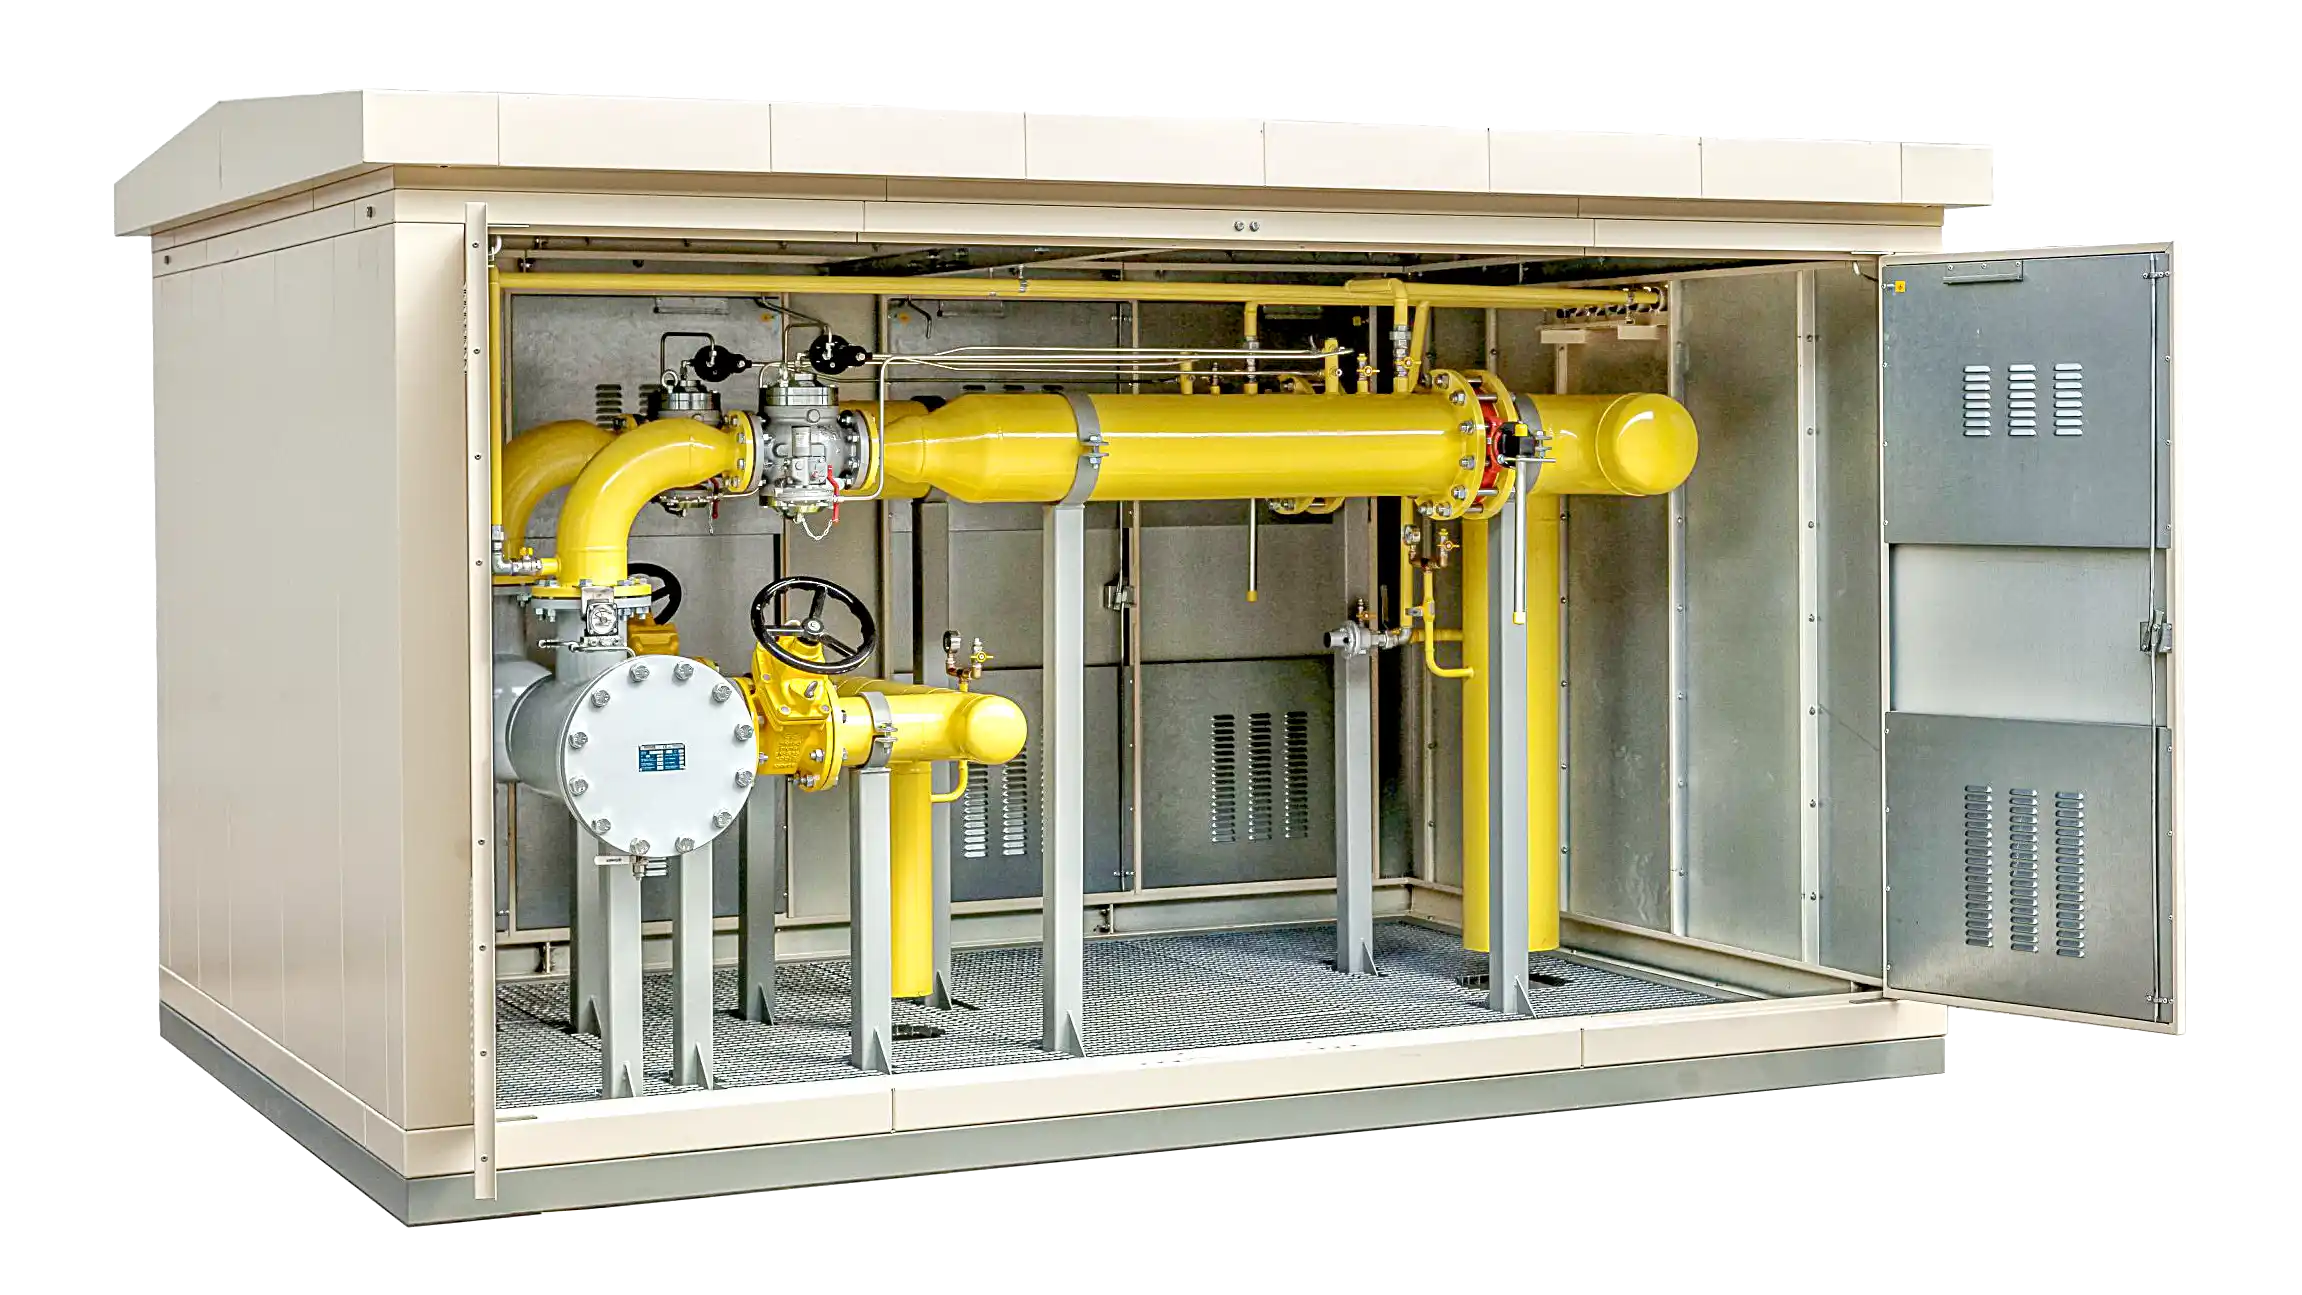 Gas pressure regulation stations according to individual needs